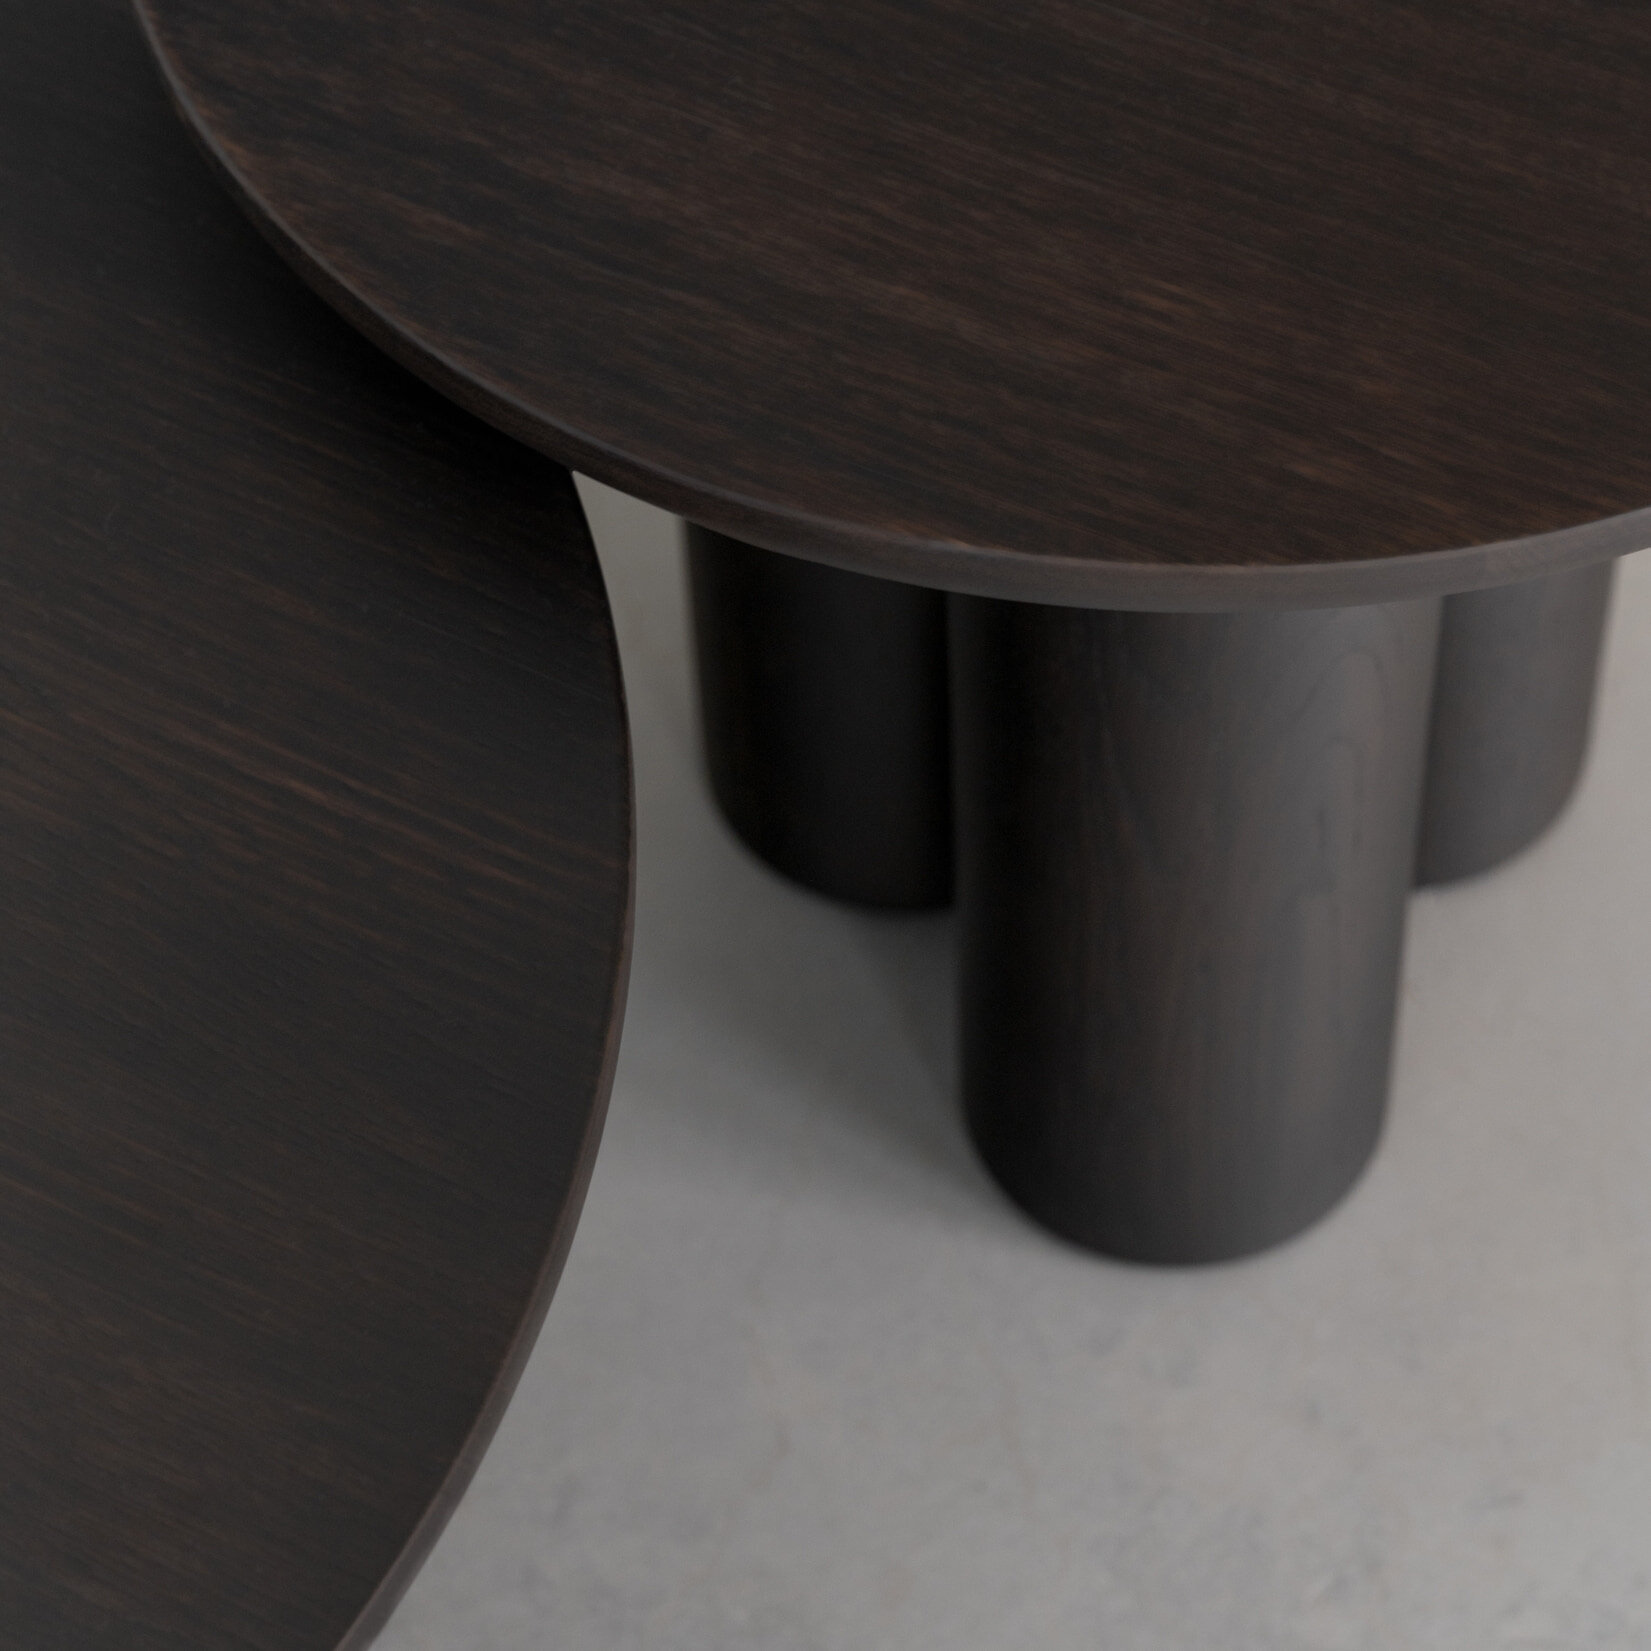 Design Coffee Table | Pillar Coffee Table round 70 Oak hardwax oil natural light 3041 | Oak hardwax oil natural light 3041 | Studio HENK| 